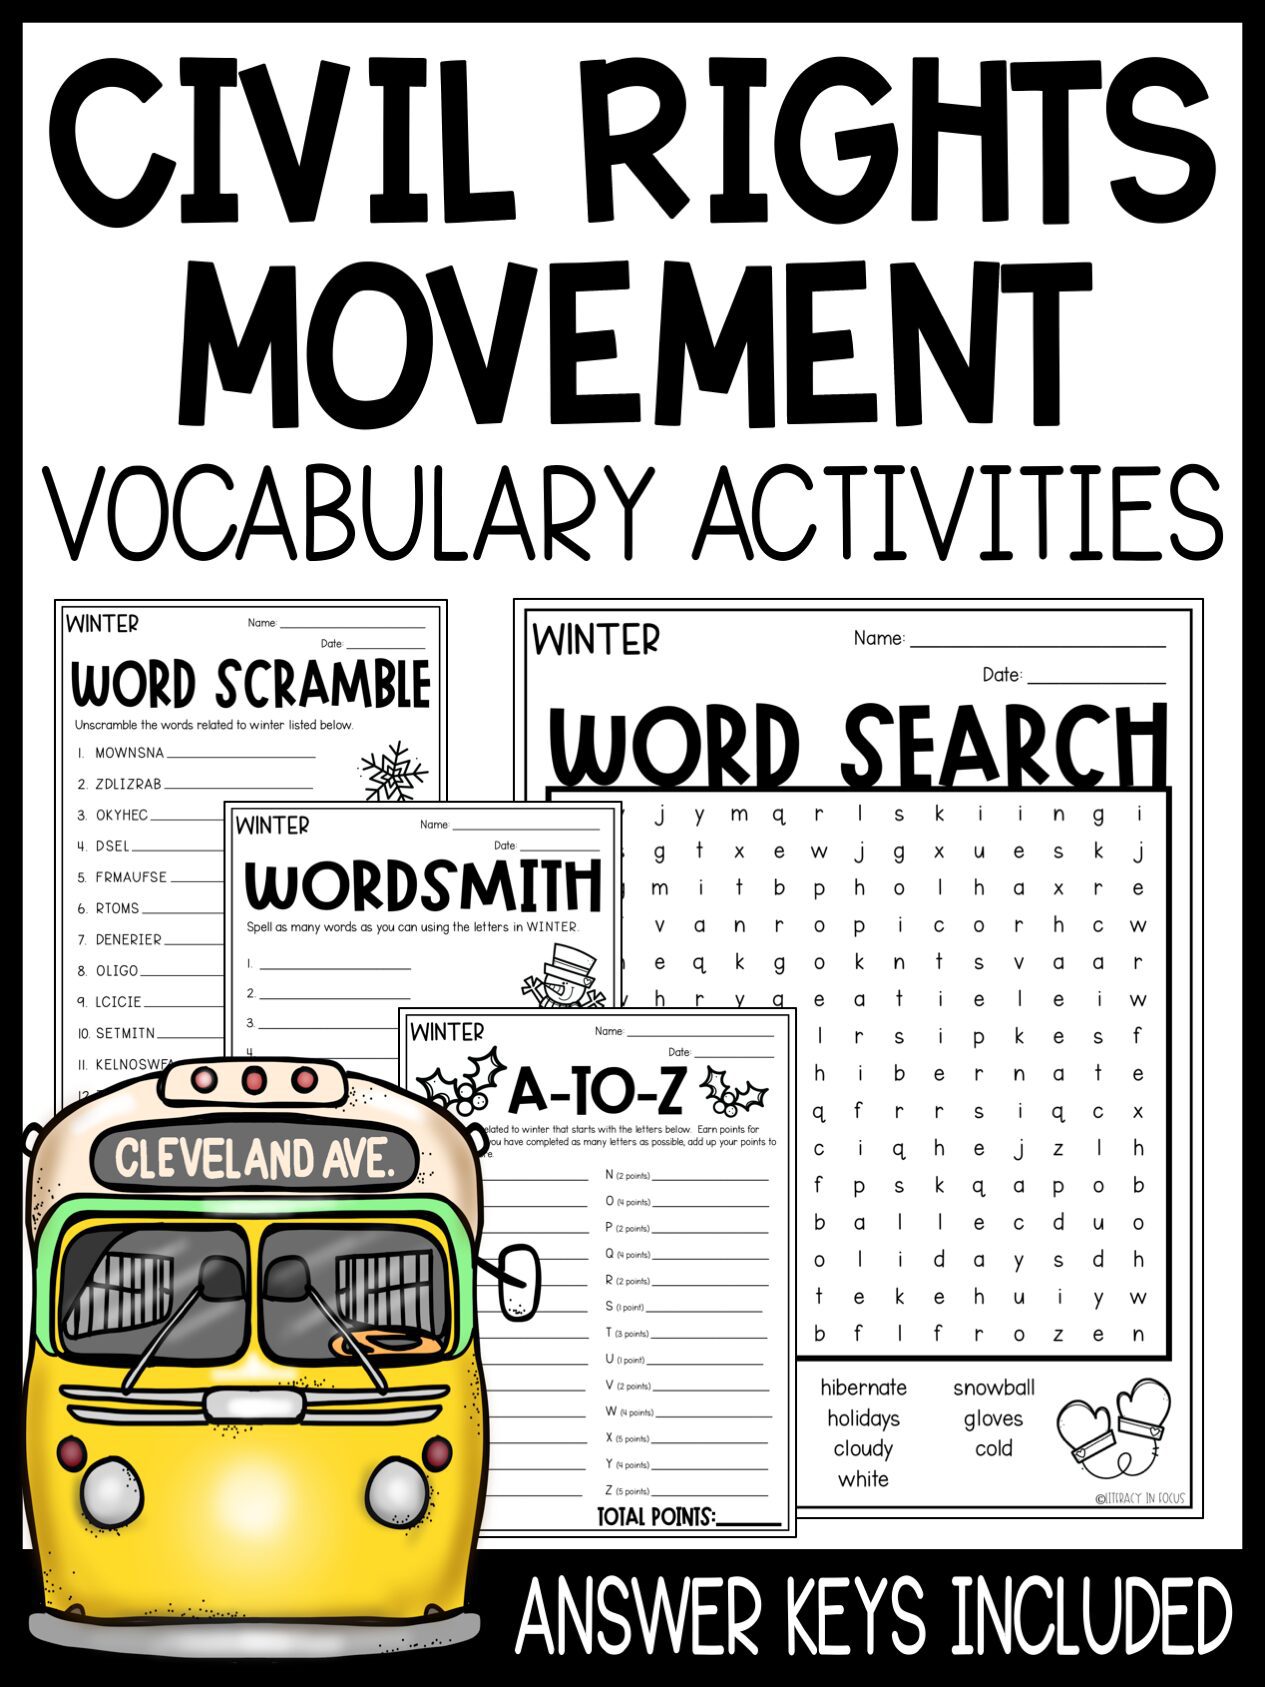 Civil Rights Movement Vocabulary Activities